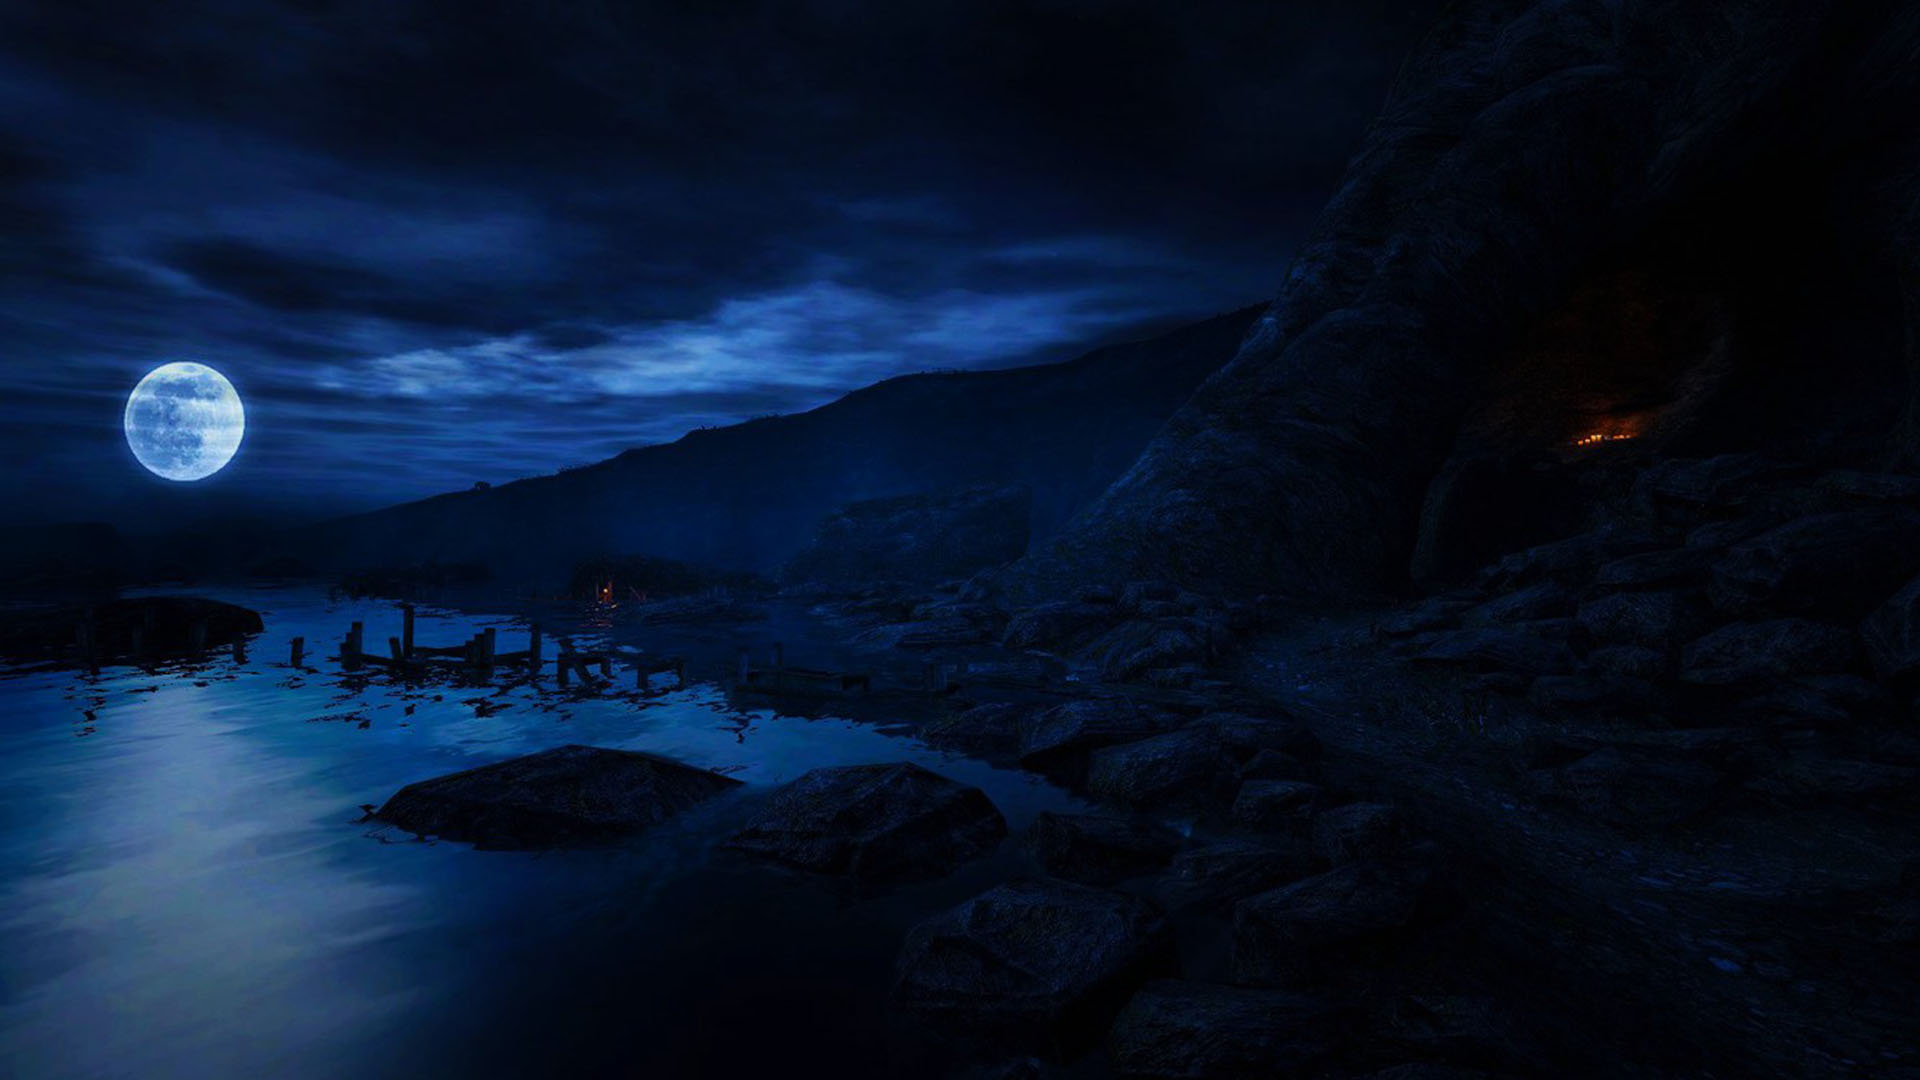 Rocks Mountains Under Moon Black Clouds Blue Sky Reflection On Water Dark Wallpaper 2K Moon